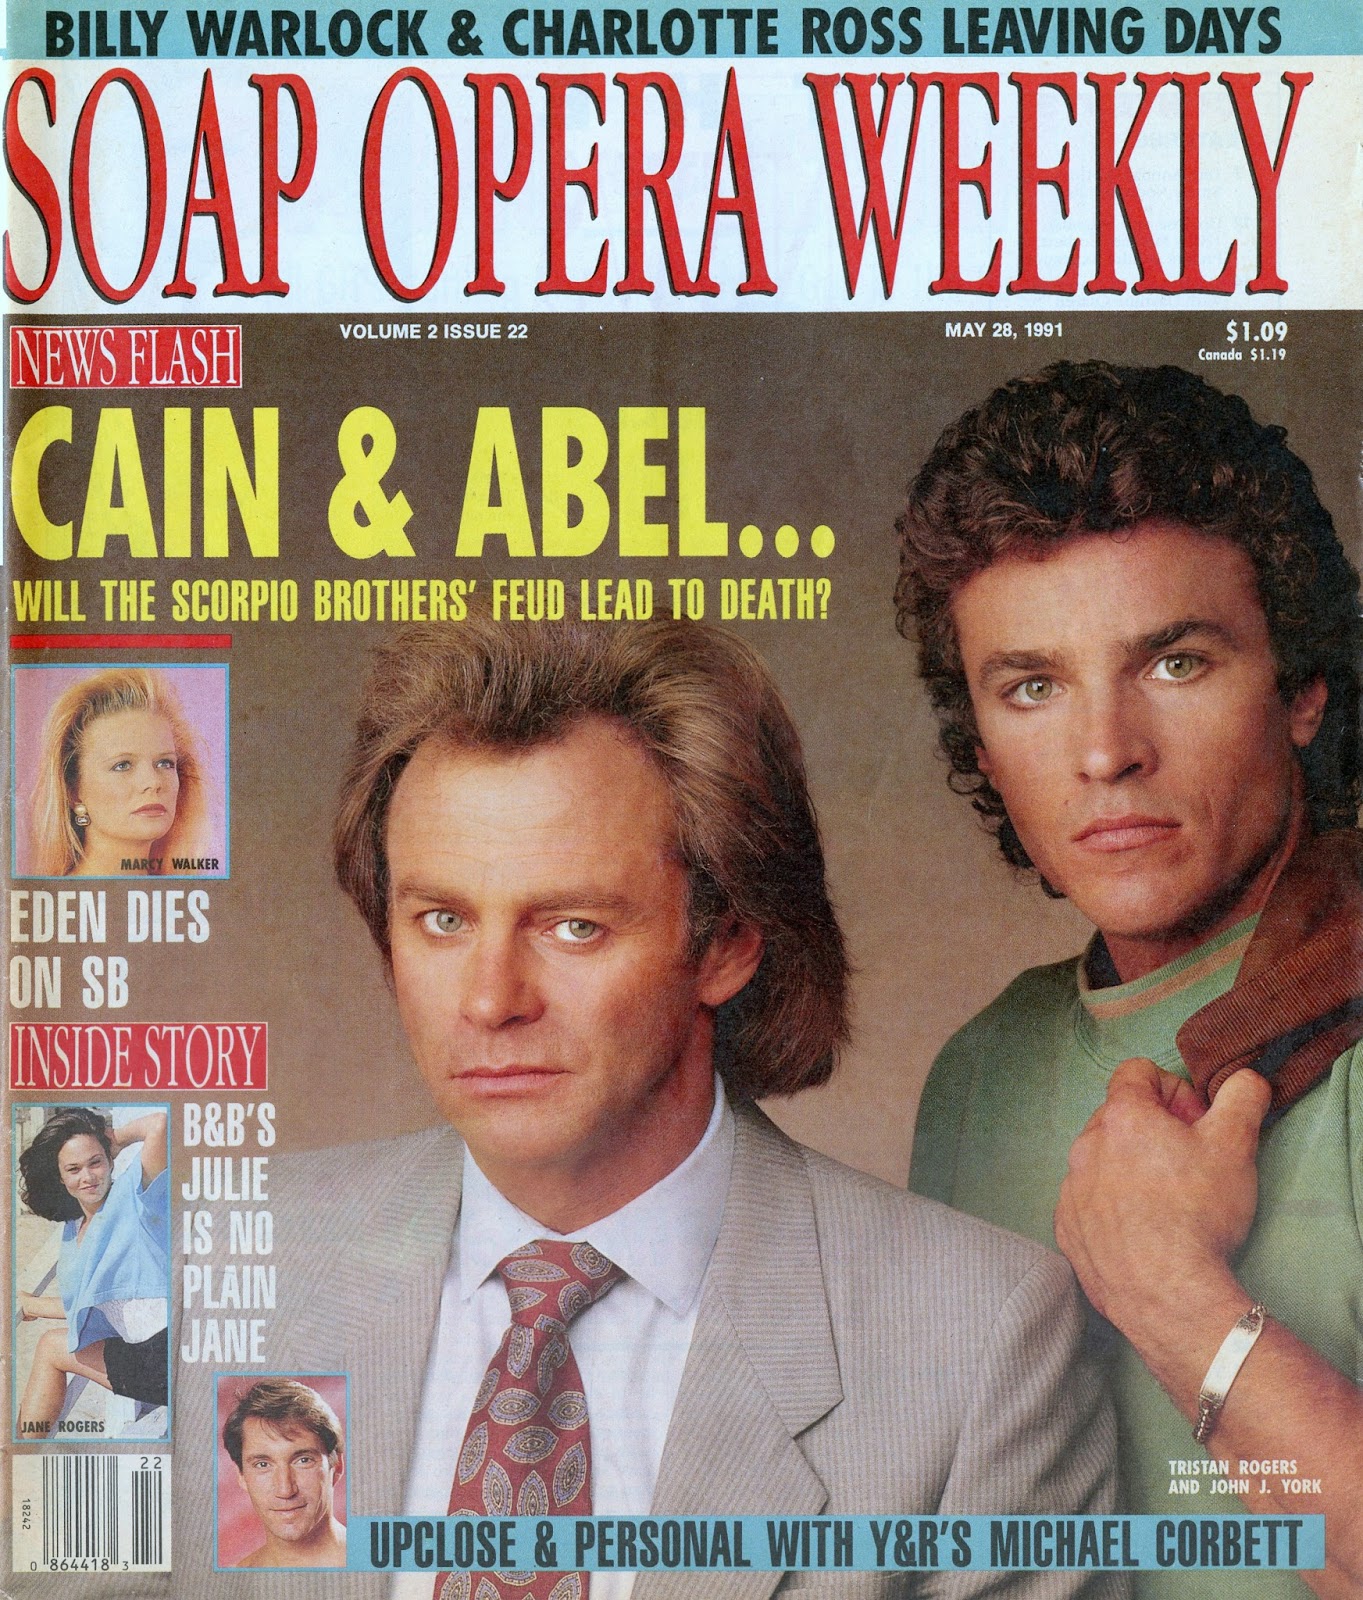 Soap Opera Weekly Cover May 28 1991